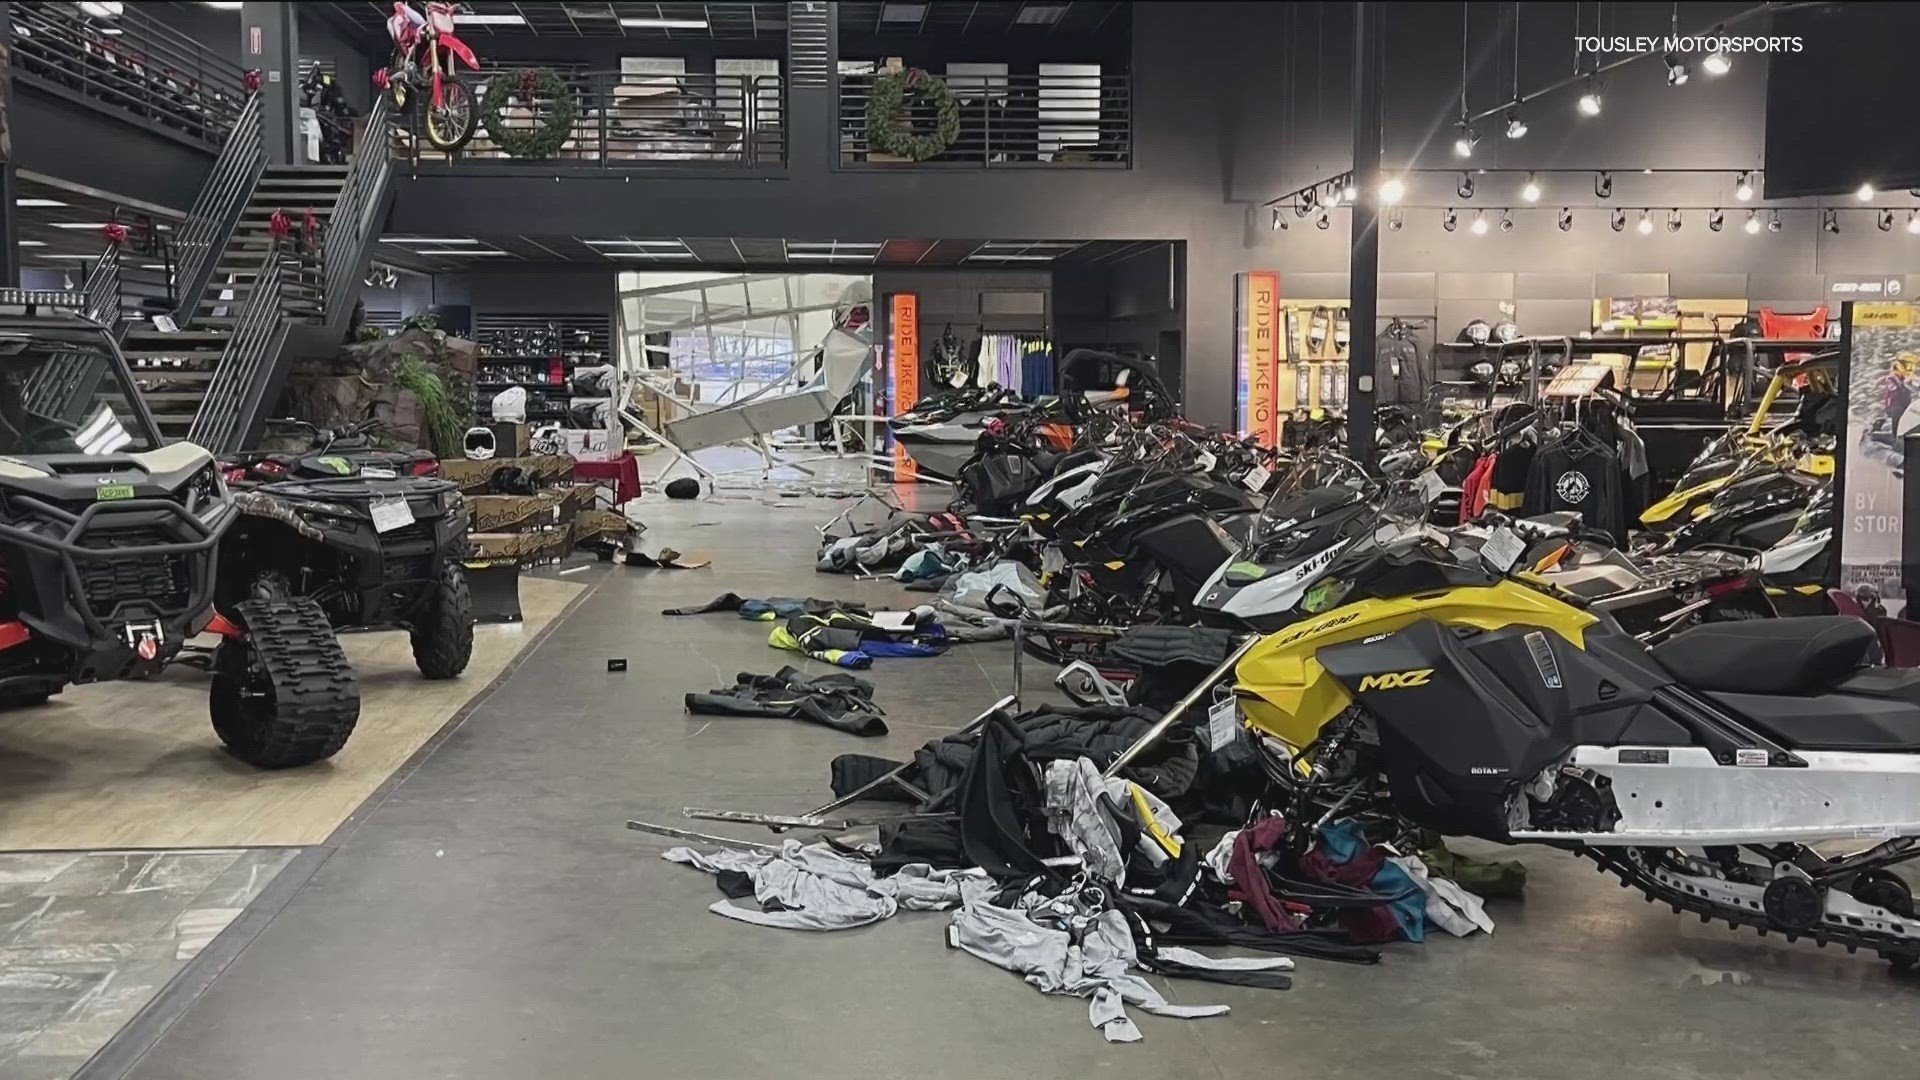 Surveillance video shows him crashing a Polaris Ranger into expensive merchandise and bursting through garage doors.